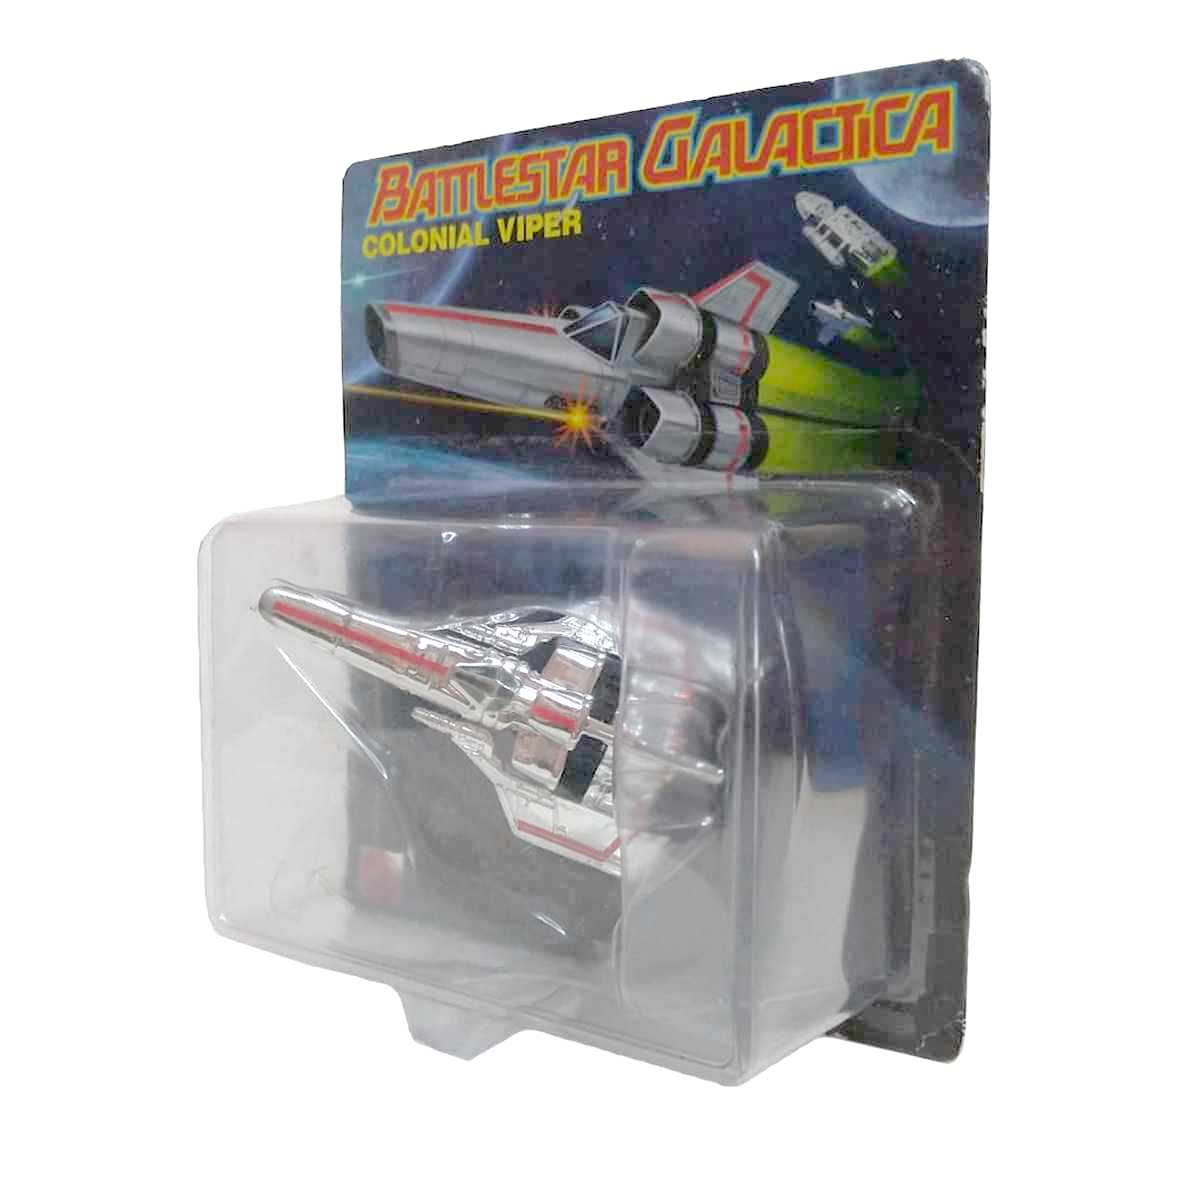 2013 SDCC Battlestar Galactica Colonial Viper cromado Mattel Hot Wheels